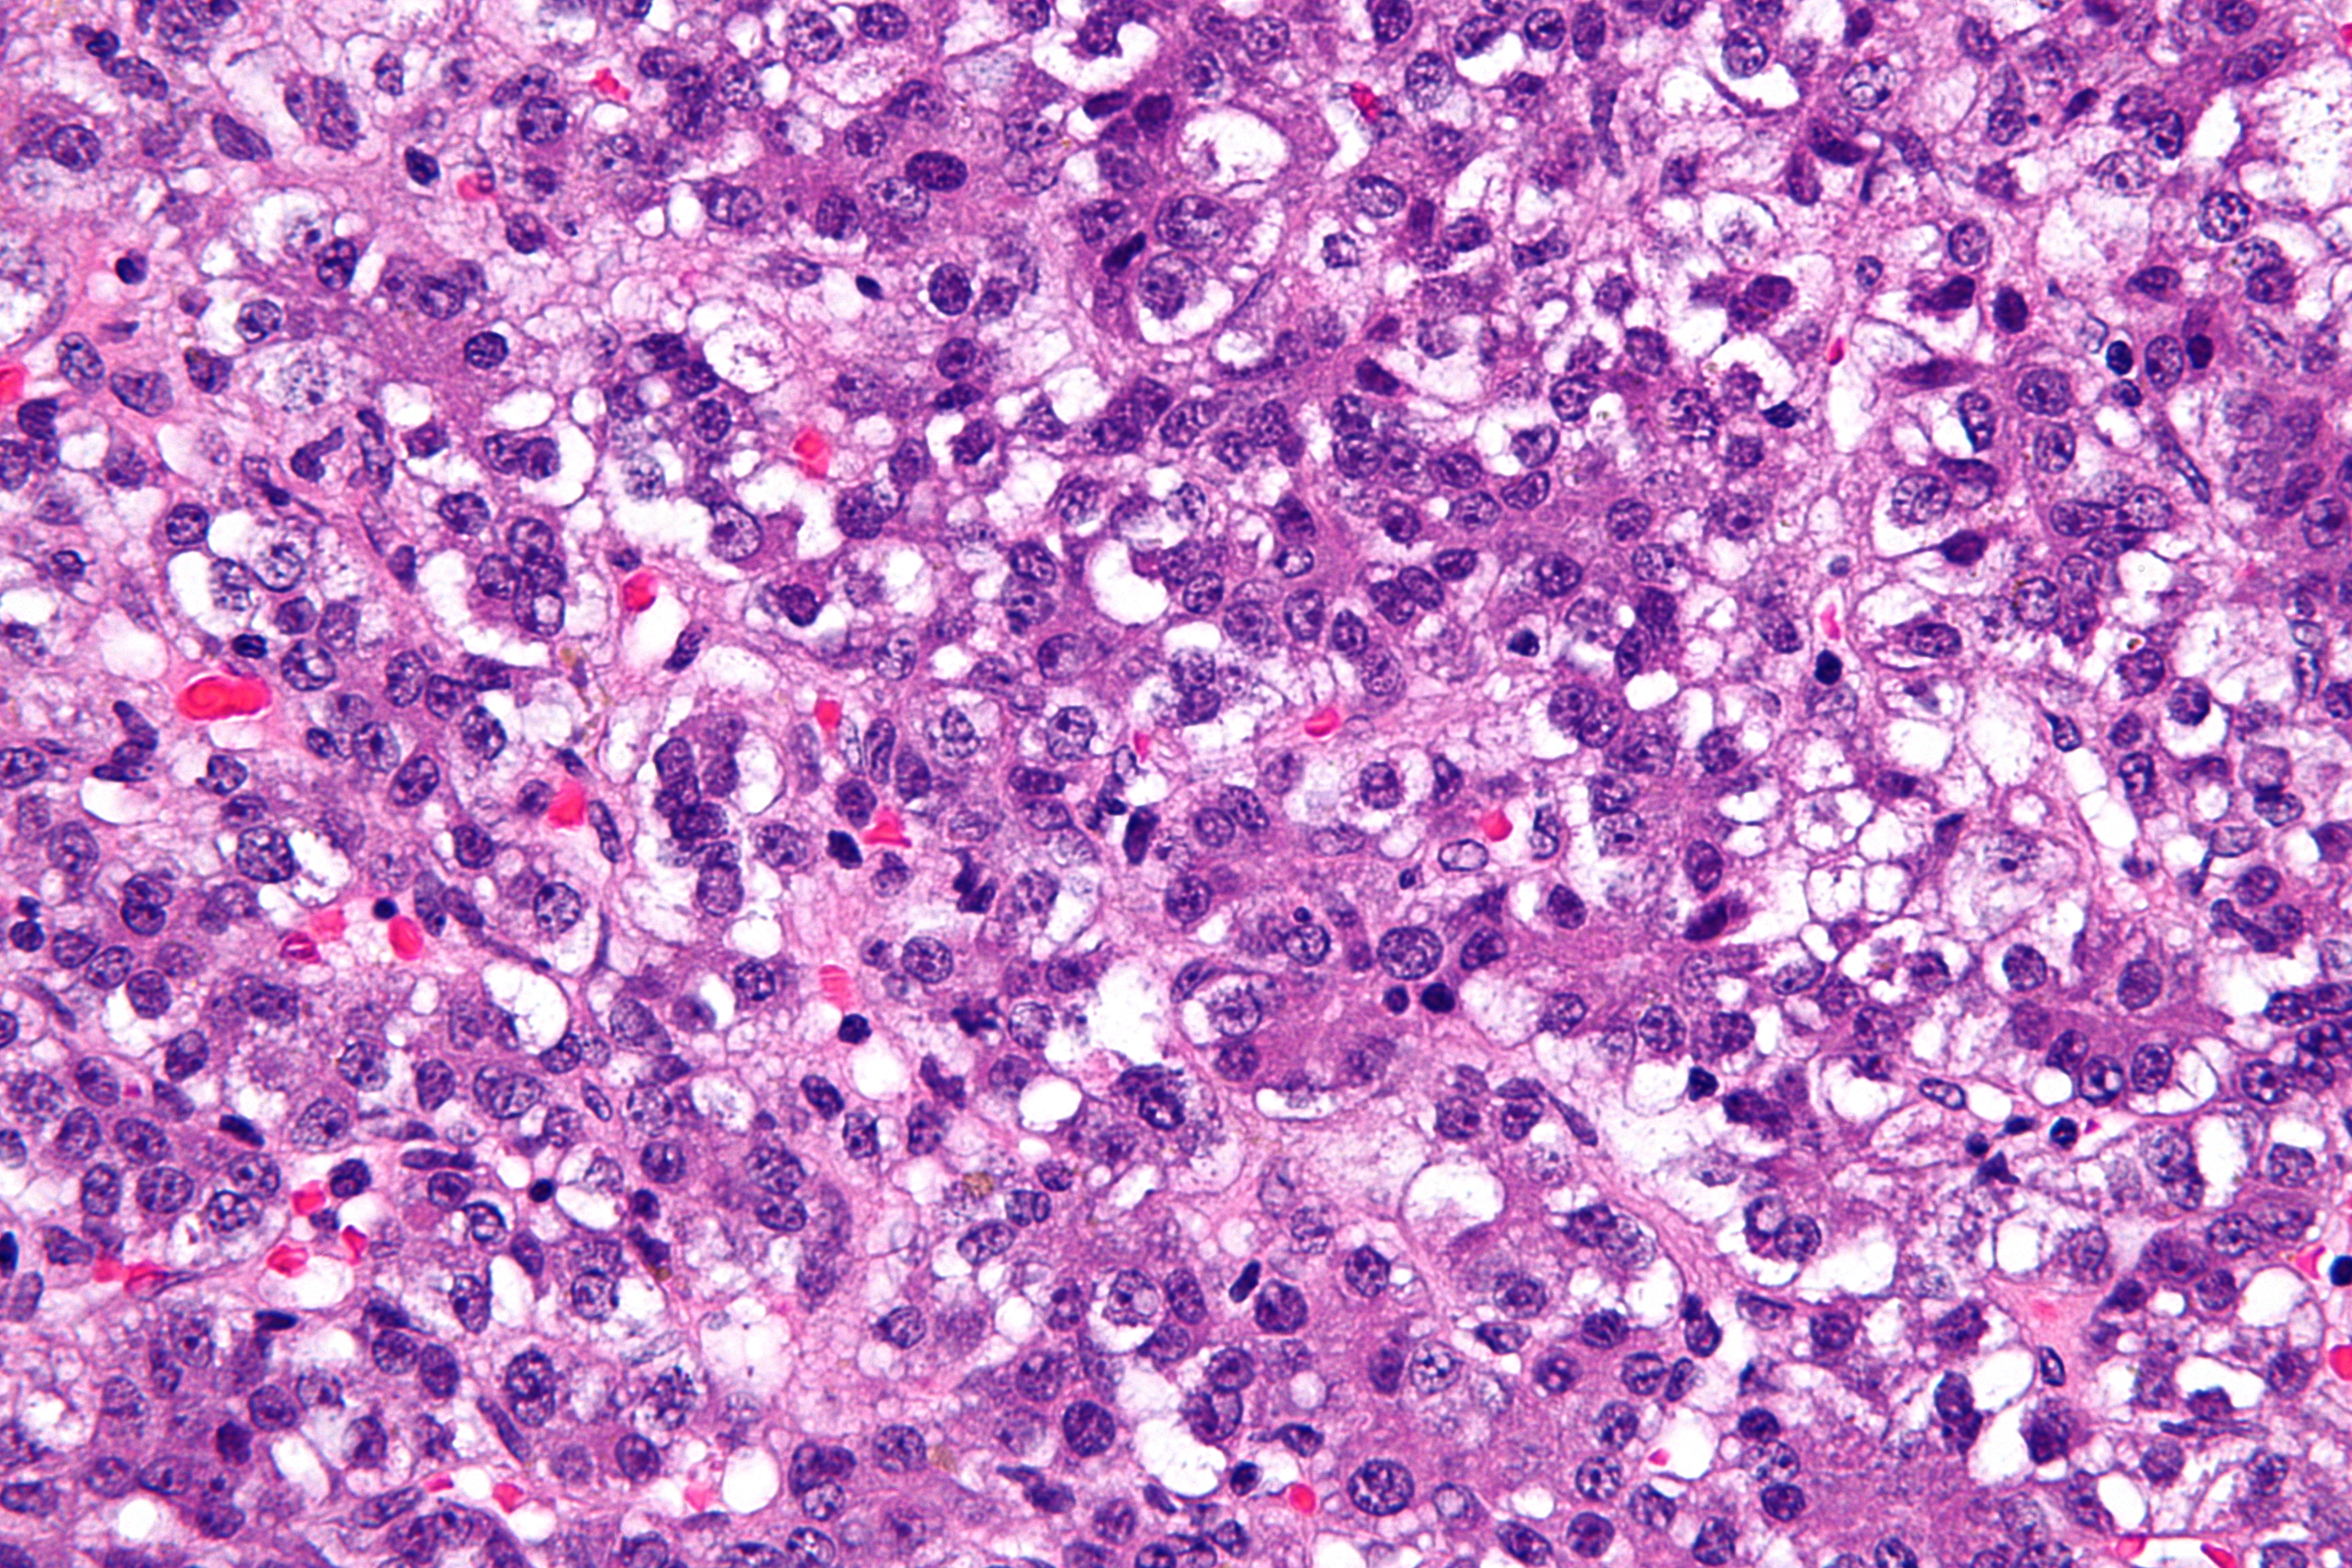 File:Hepatoblastoma.jpg